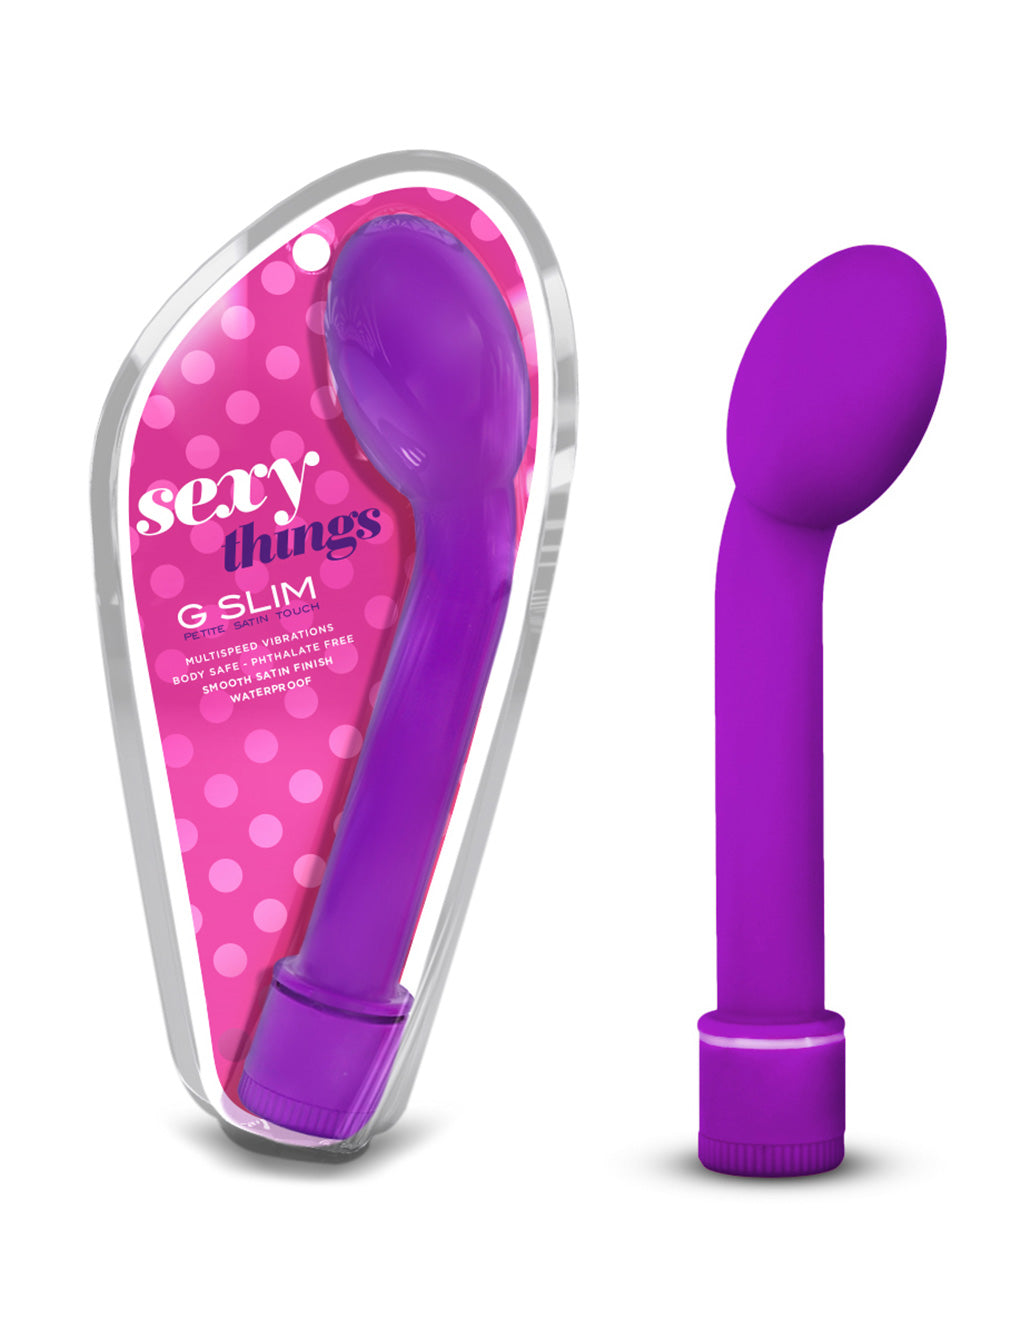 Sexy Things G Slim Petite G-spot Vibrator- Purple- Package